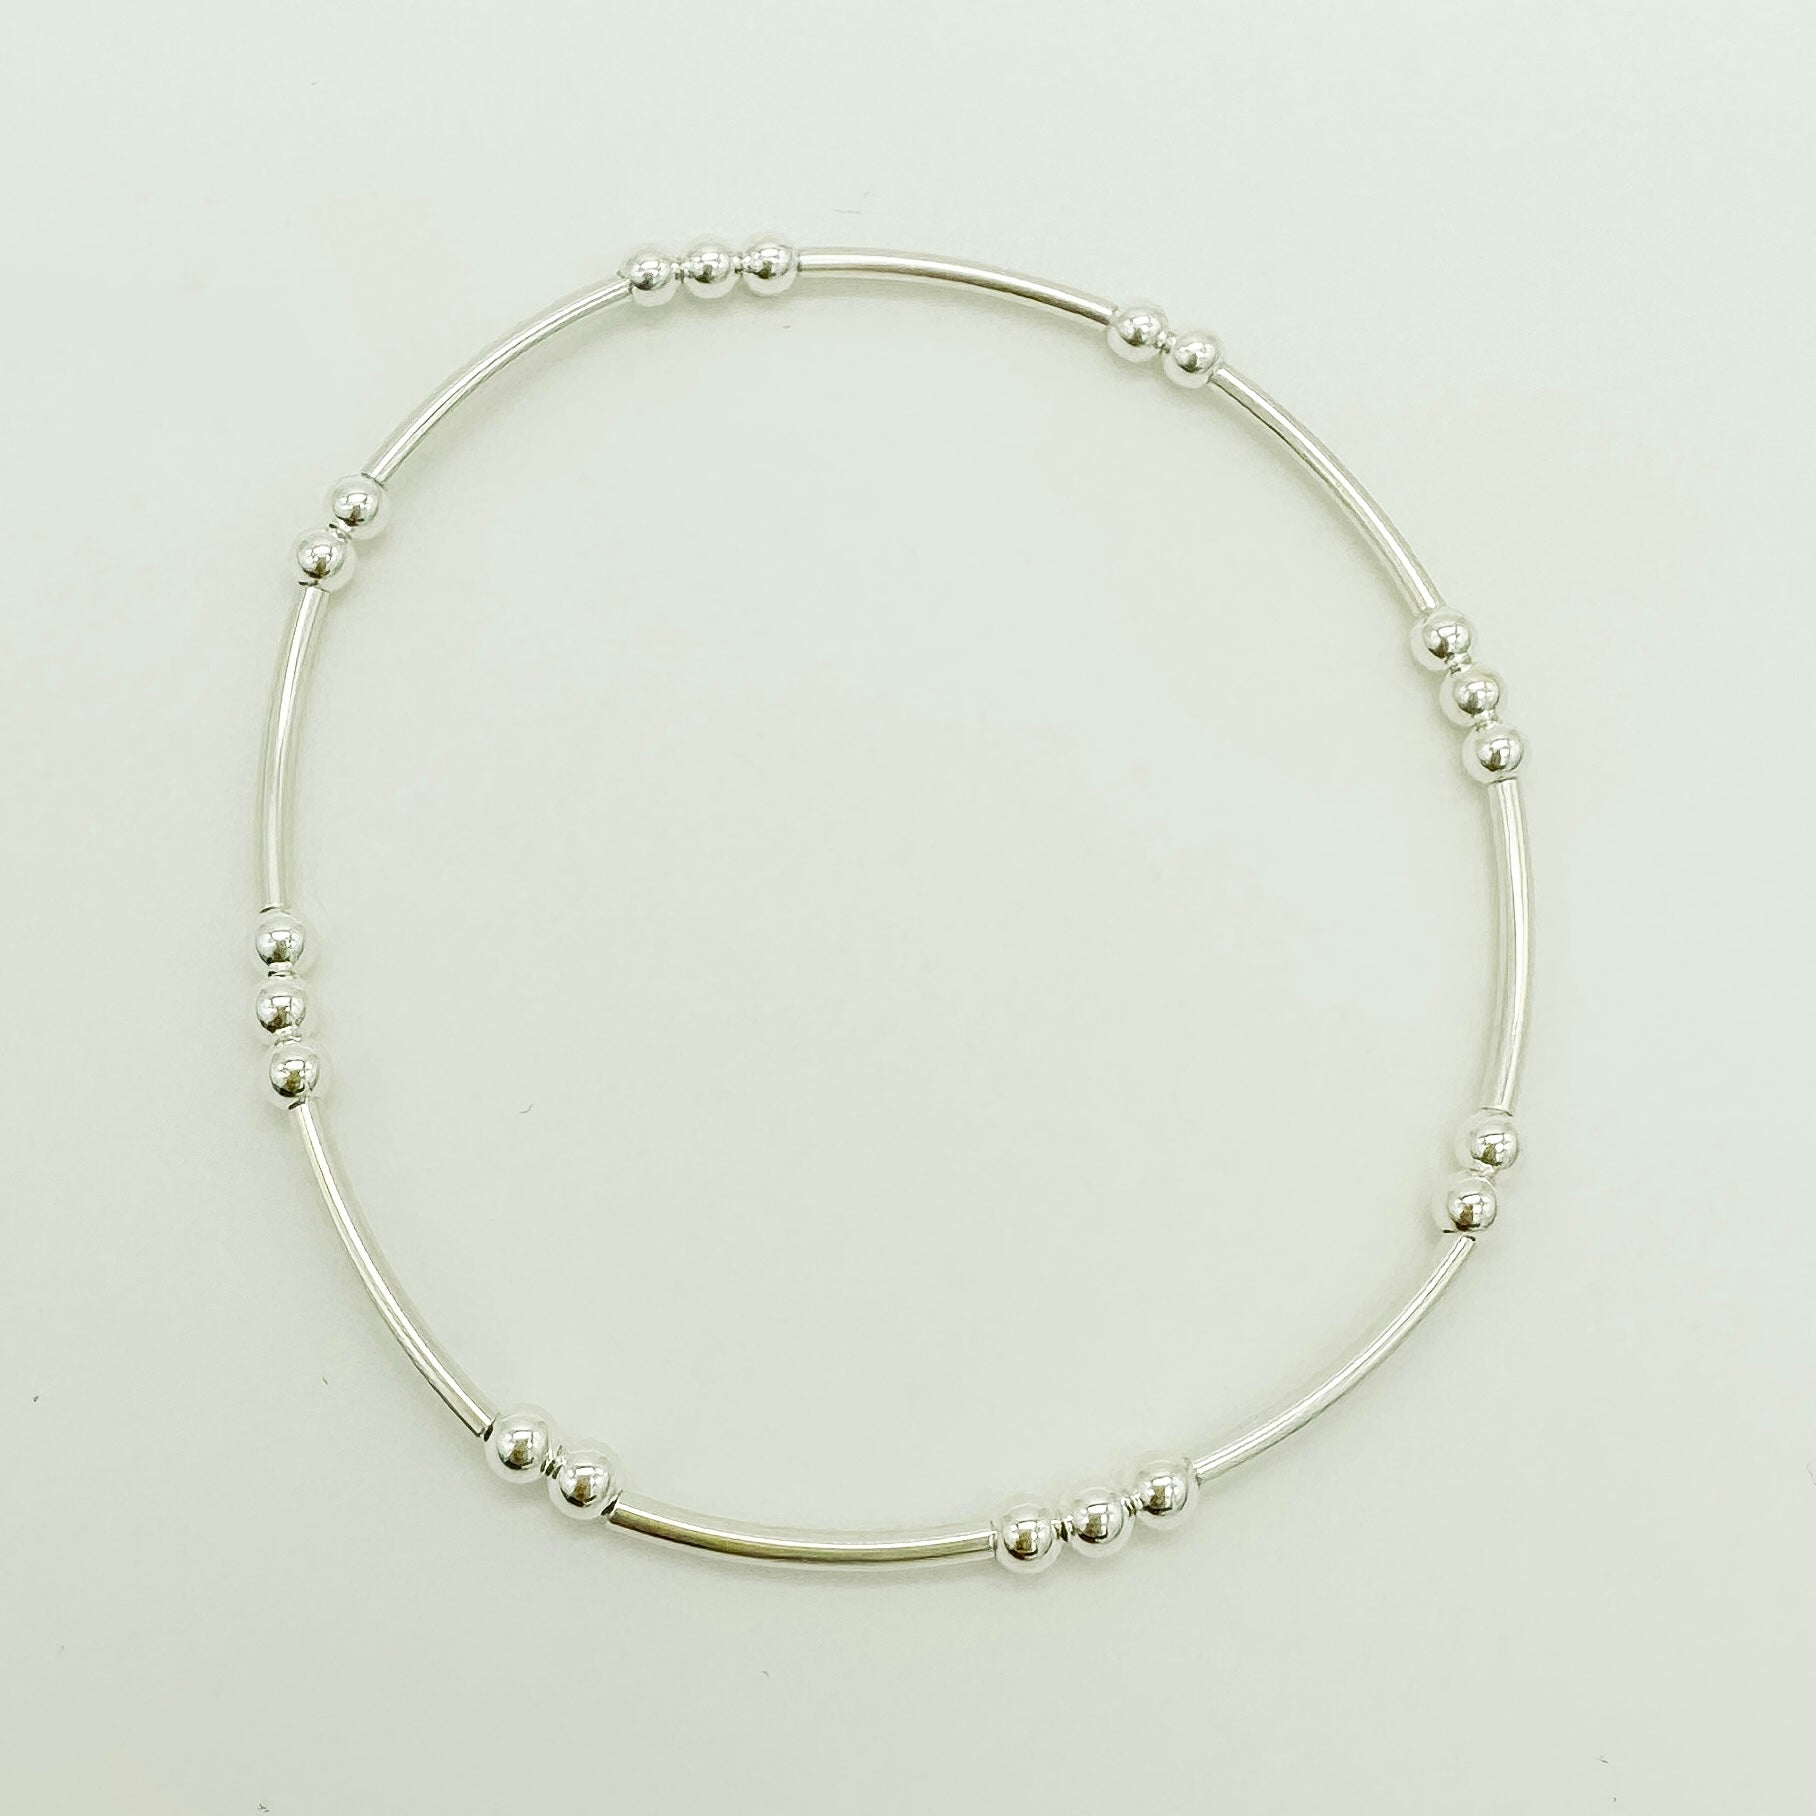 sterling silver bracelet / sterling silver beaded bracelet / beaded bracelet / permanent jewelry supplies